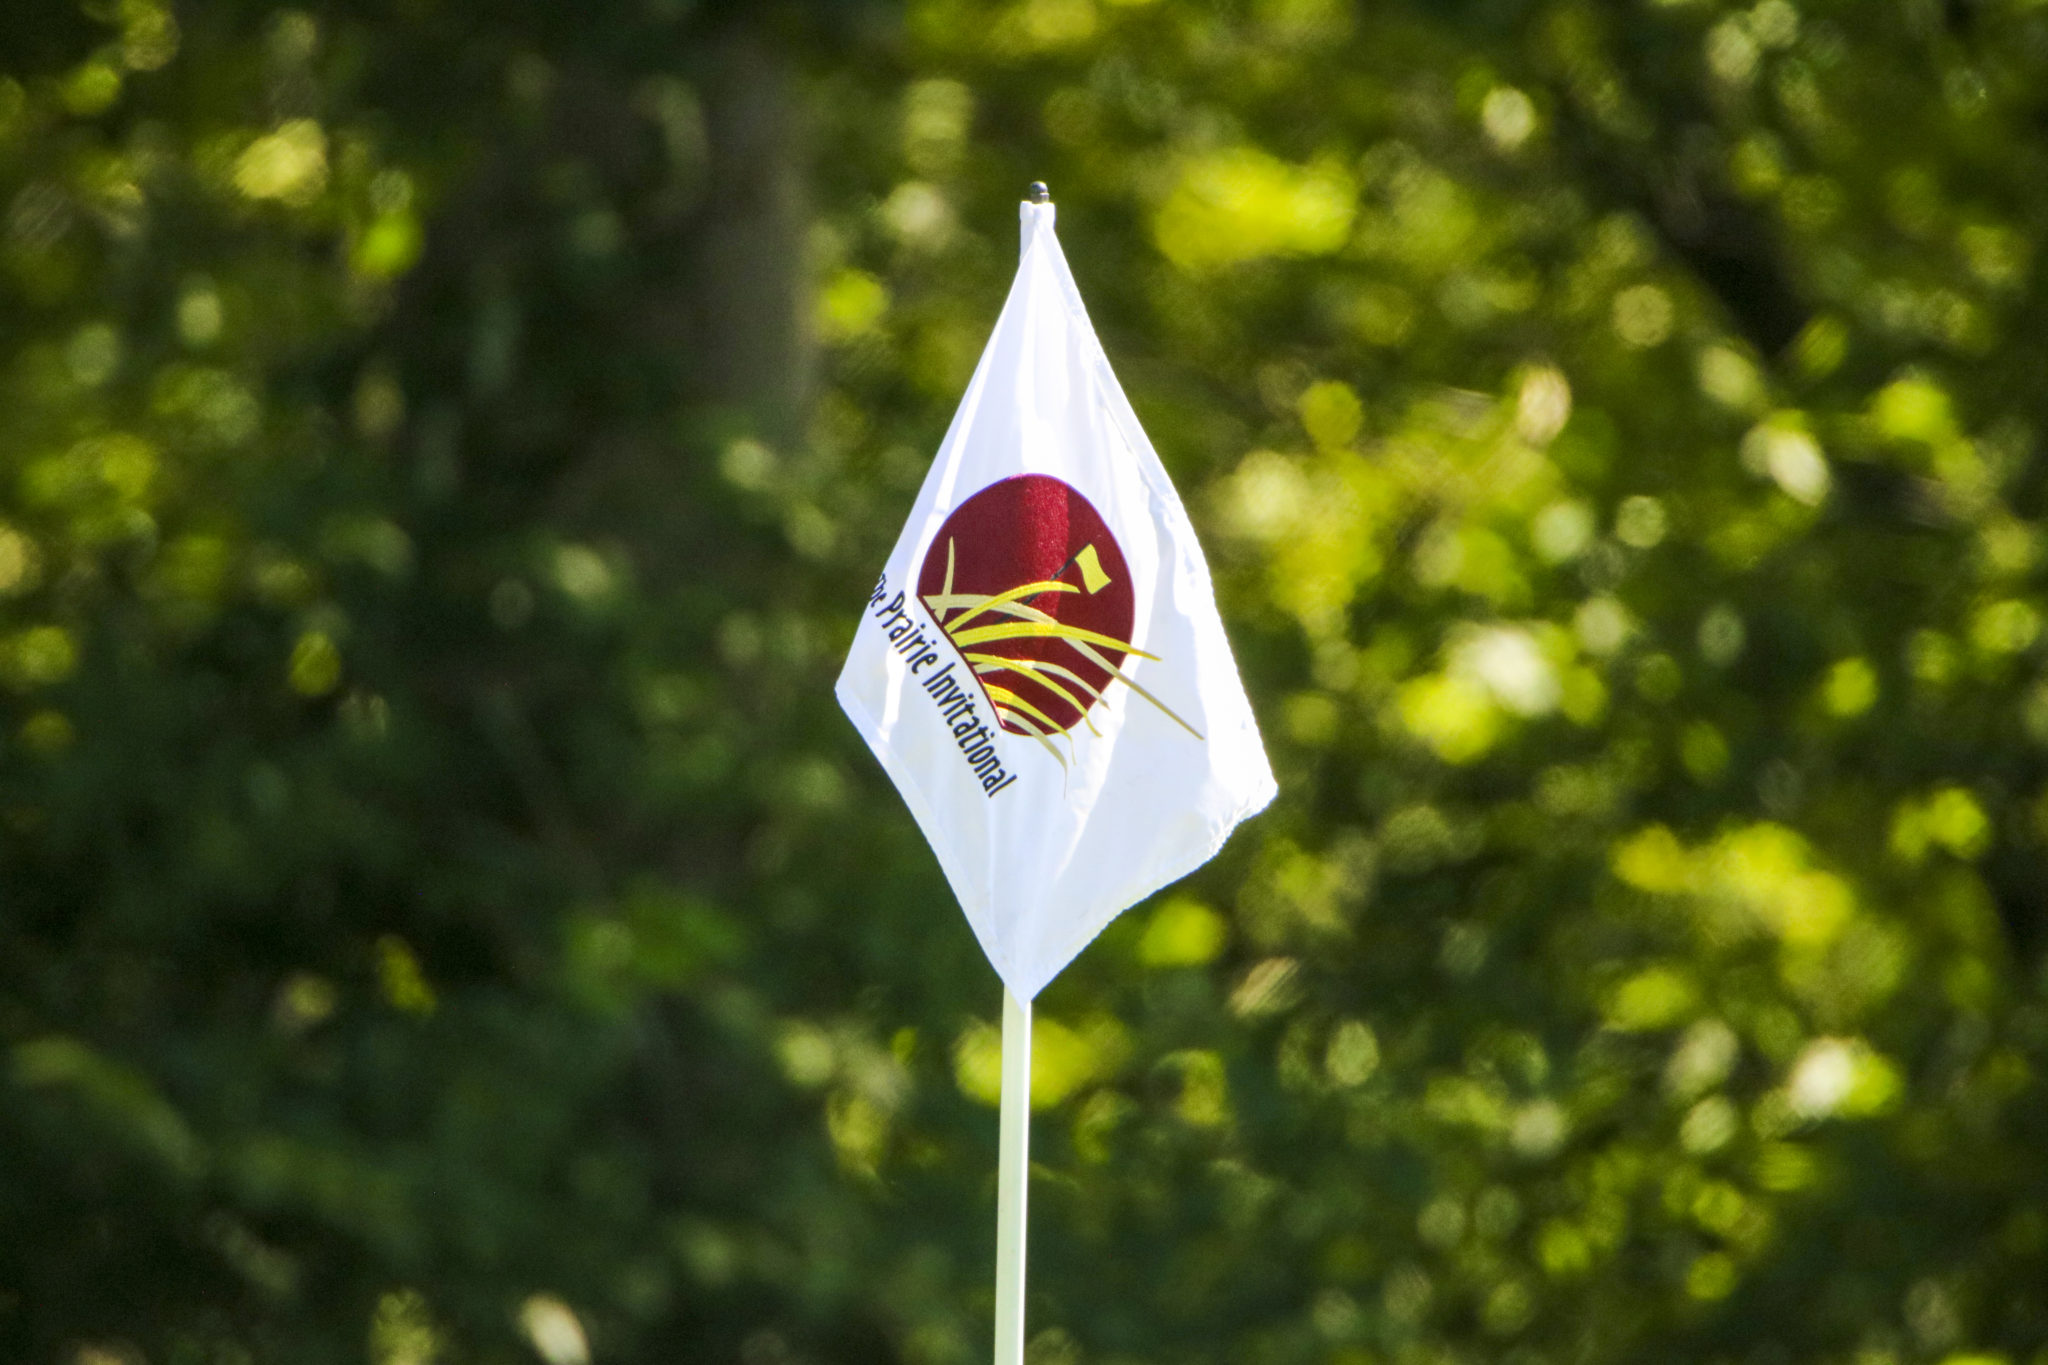 The Prairie Invitational 2020 Central Links Golf